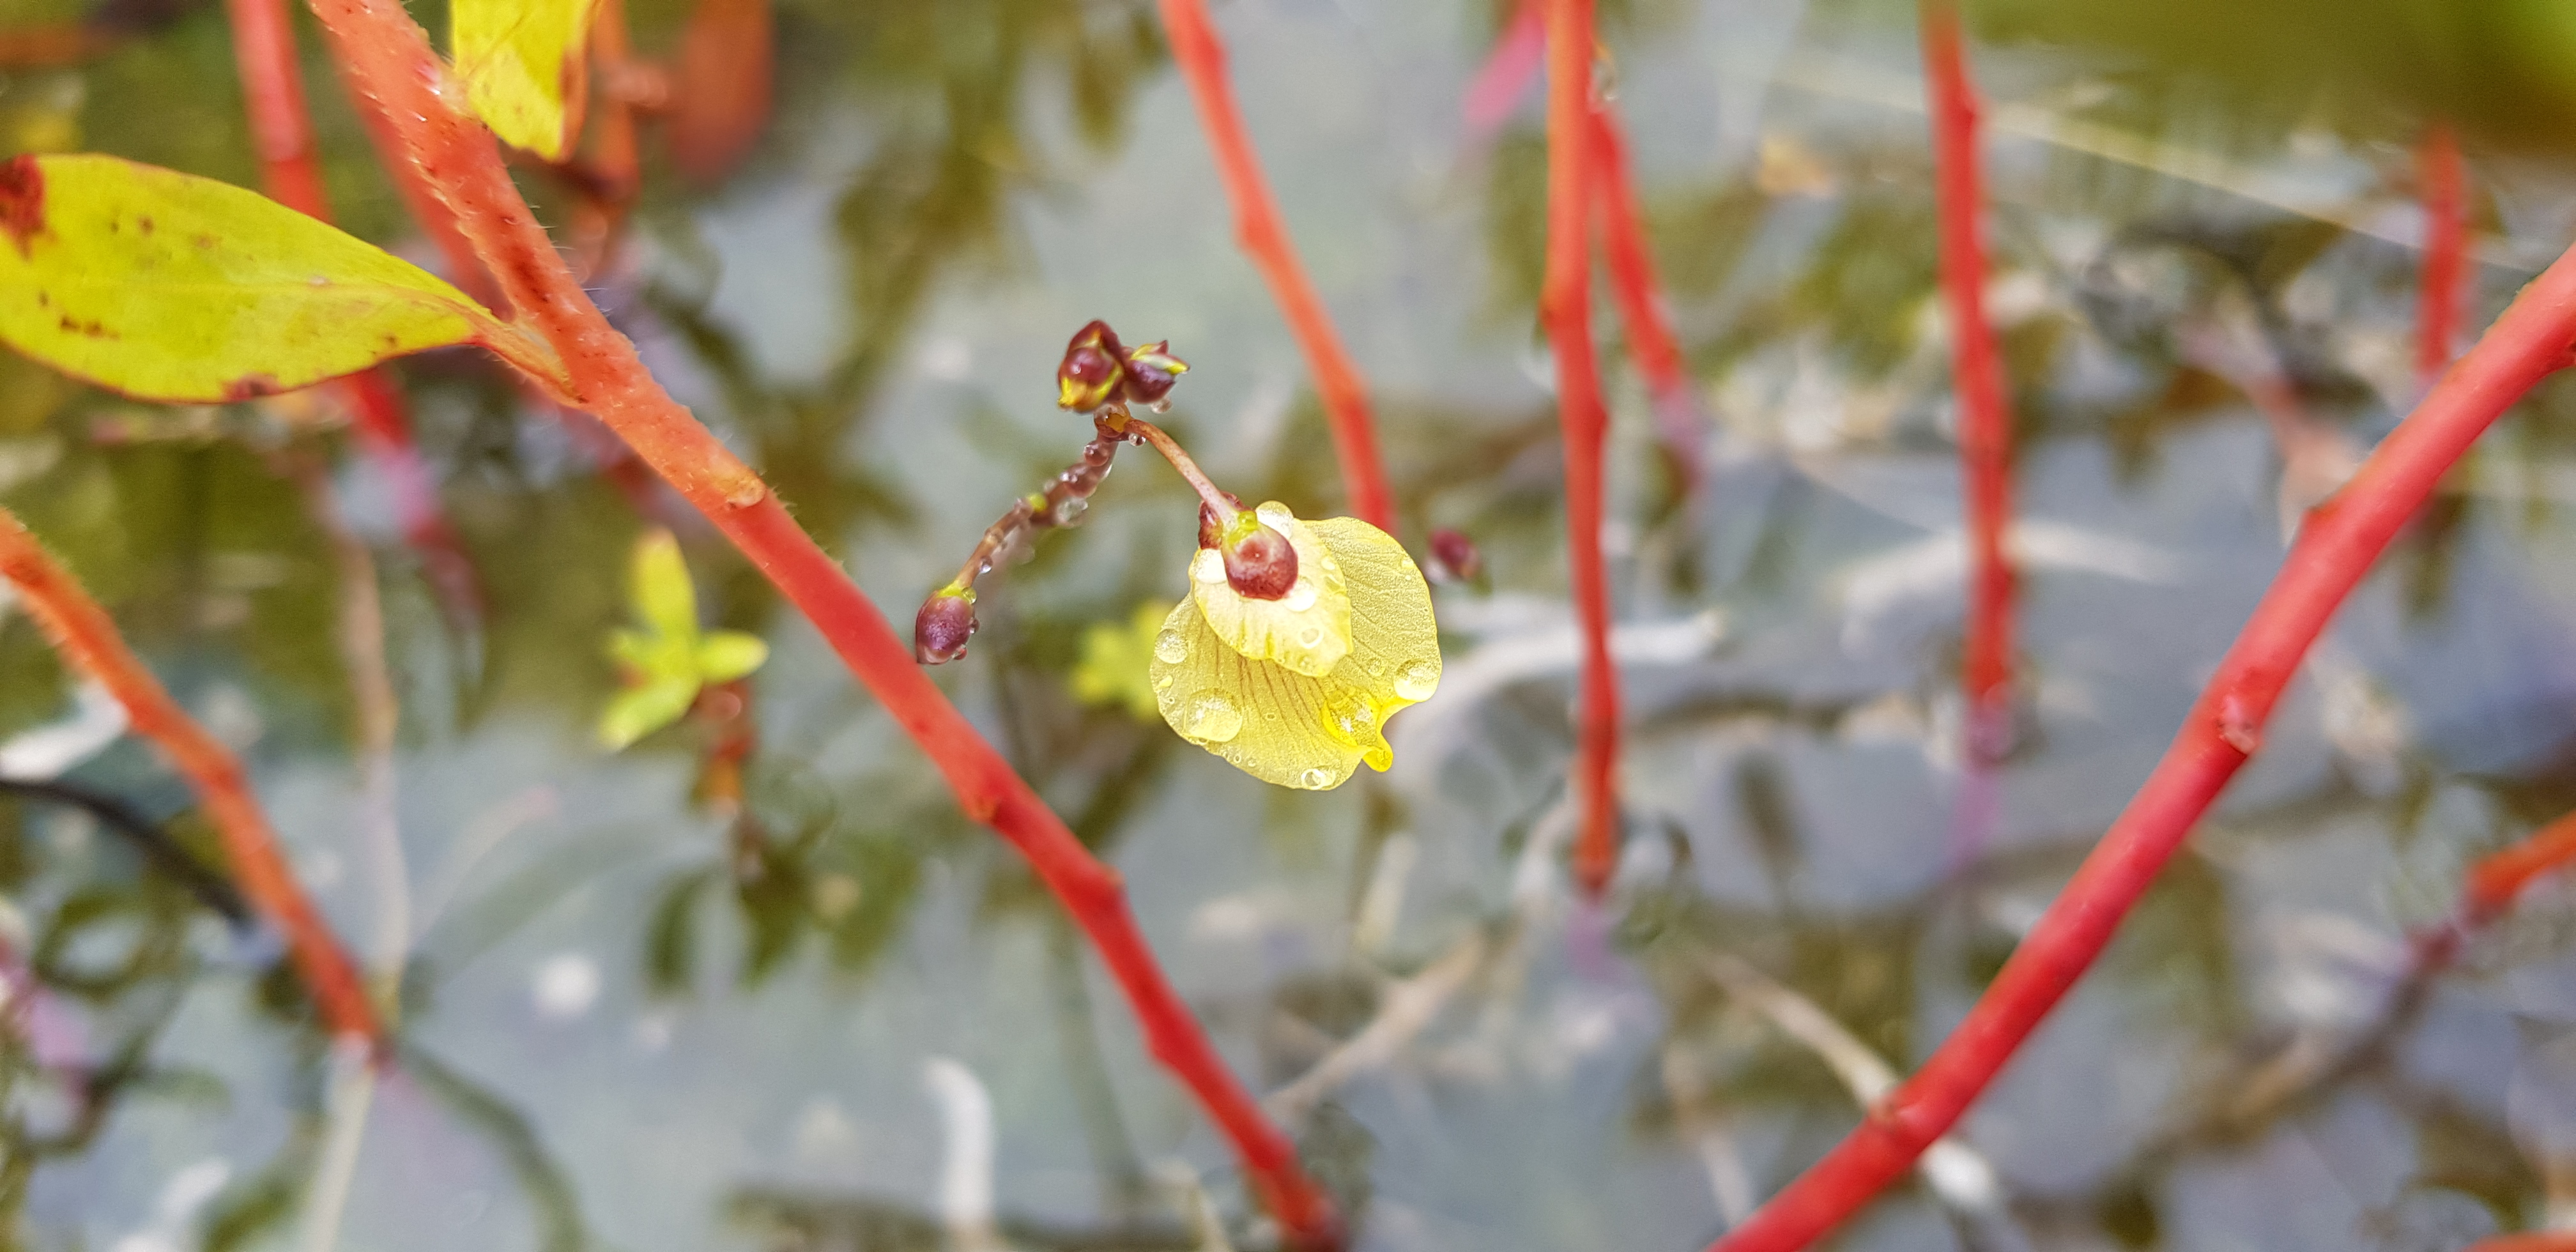 Lápi rence - Utricularia bremii